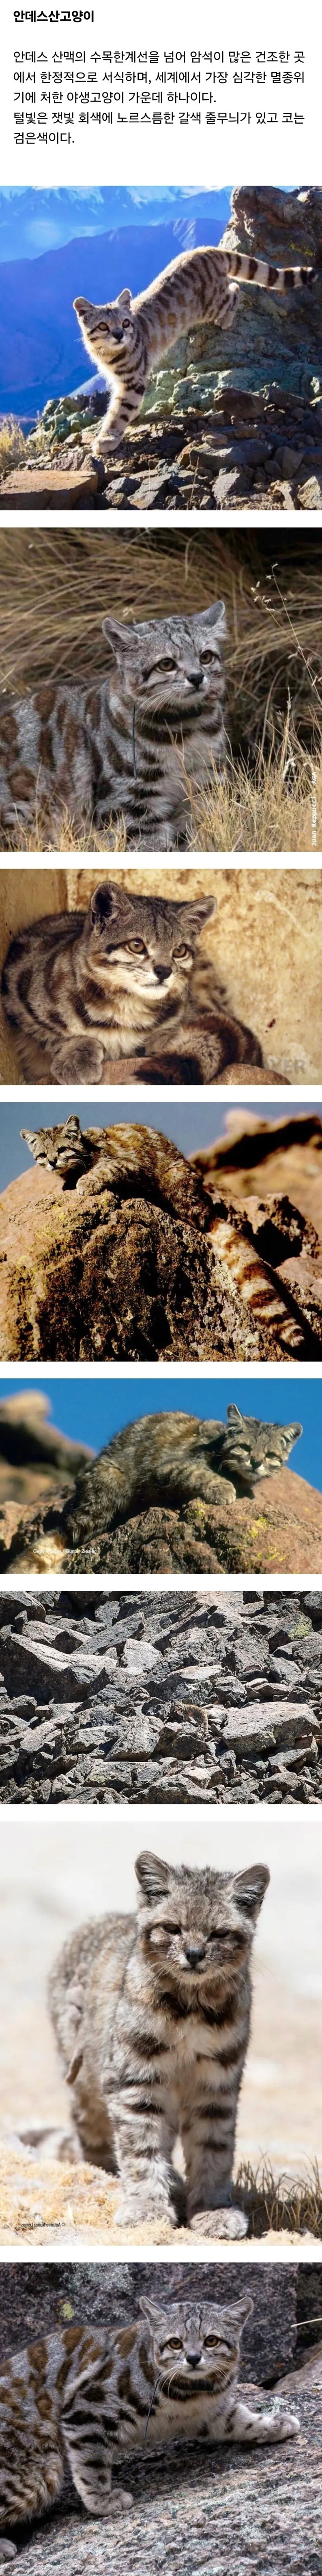 FireShot Capture 1673 - 전 세계에 2천여마리 밖에 안남은 멸종위기 고양이.jpg - www.etoland.co.kr.jpg